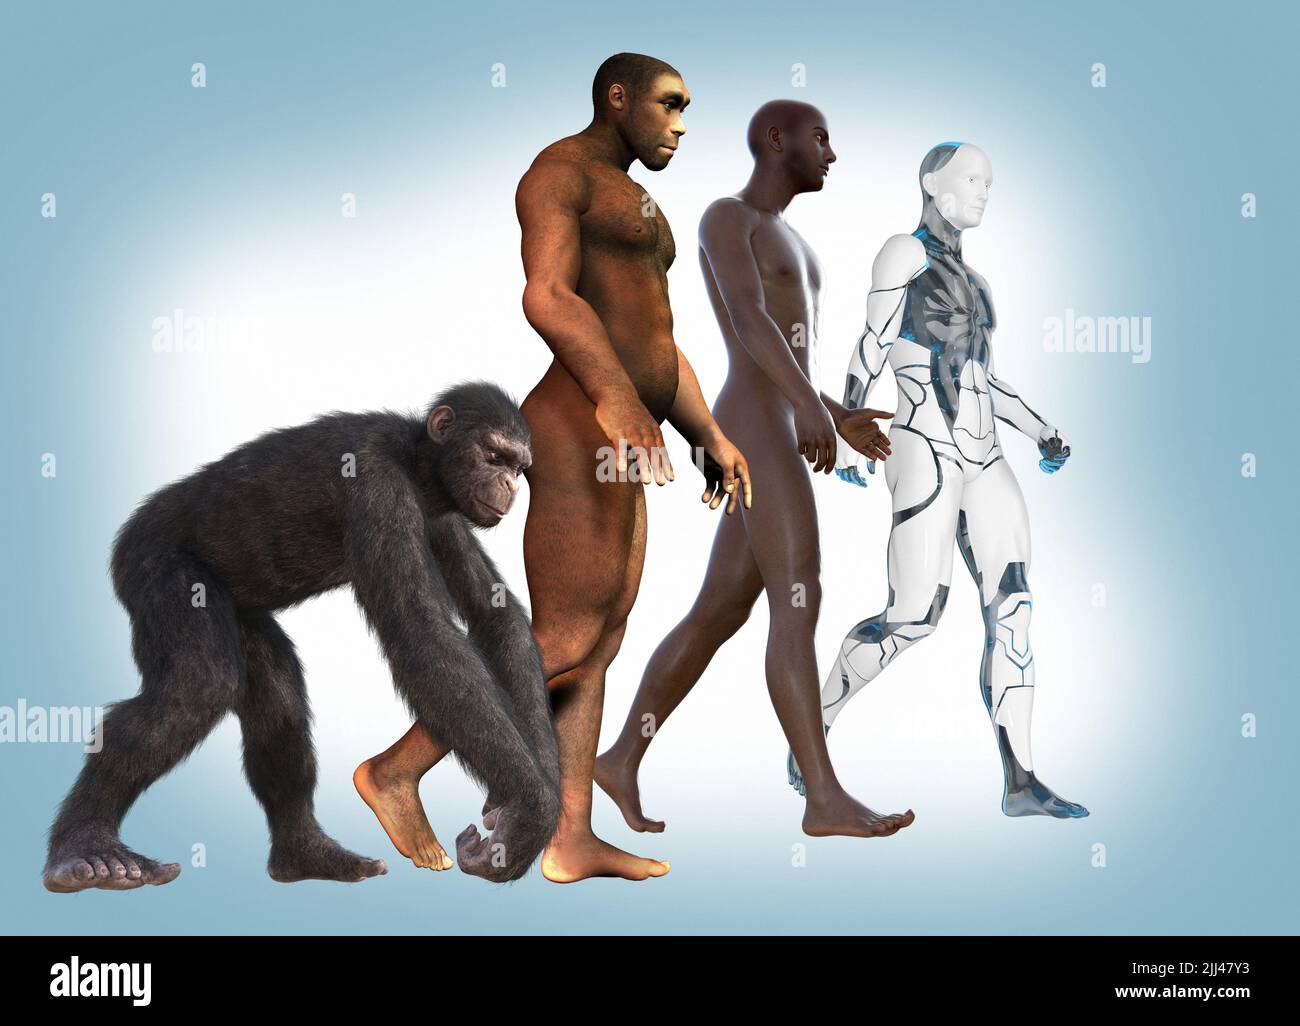 Human evolution, conceptual illustration. Stock Photo